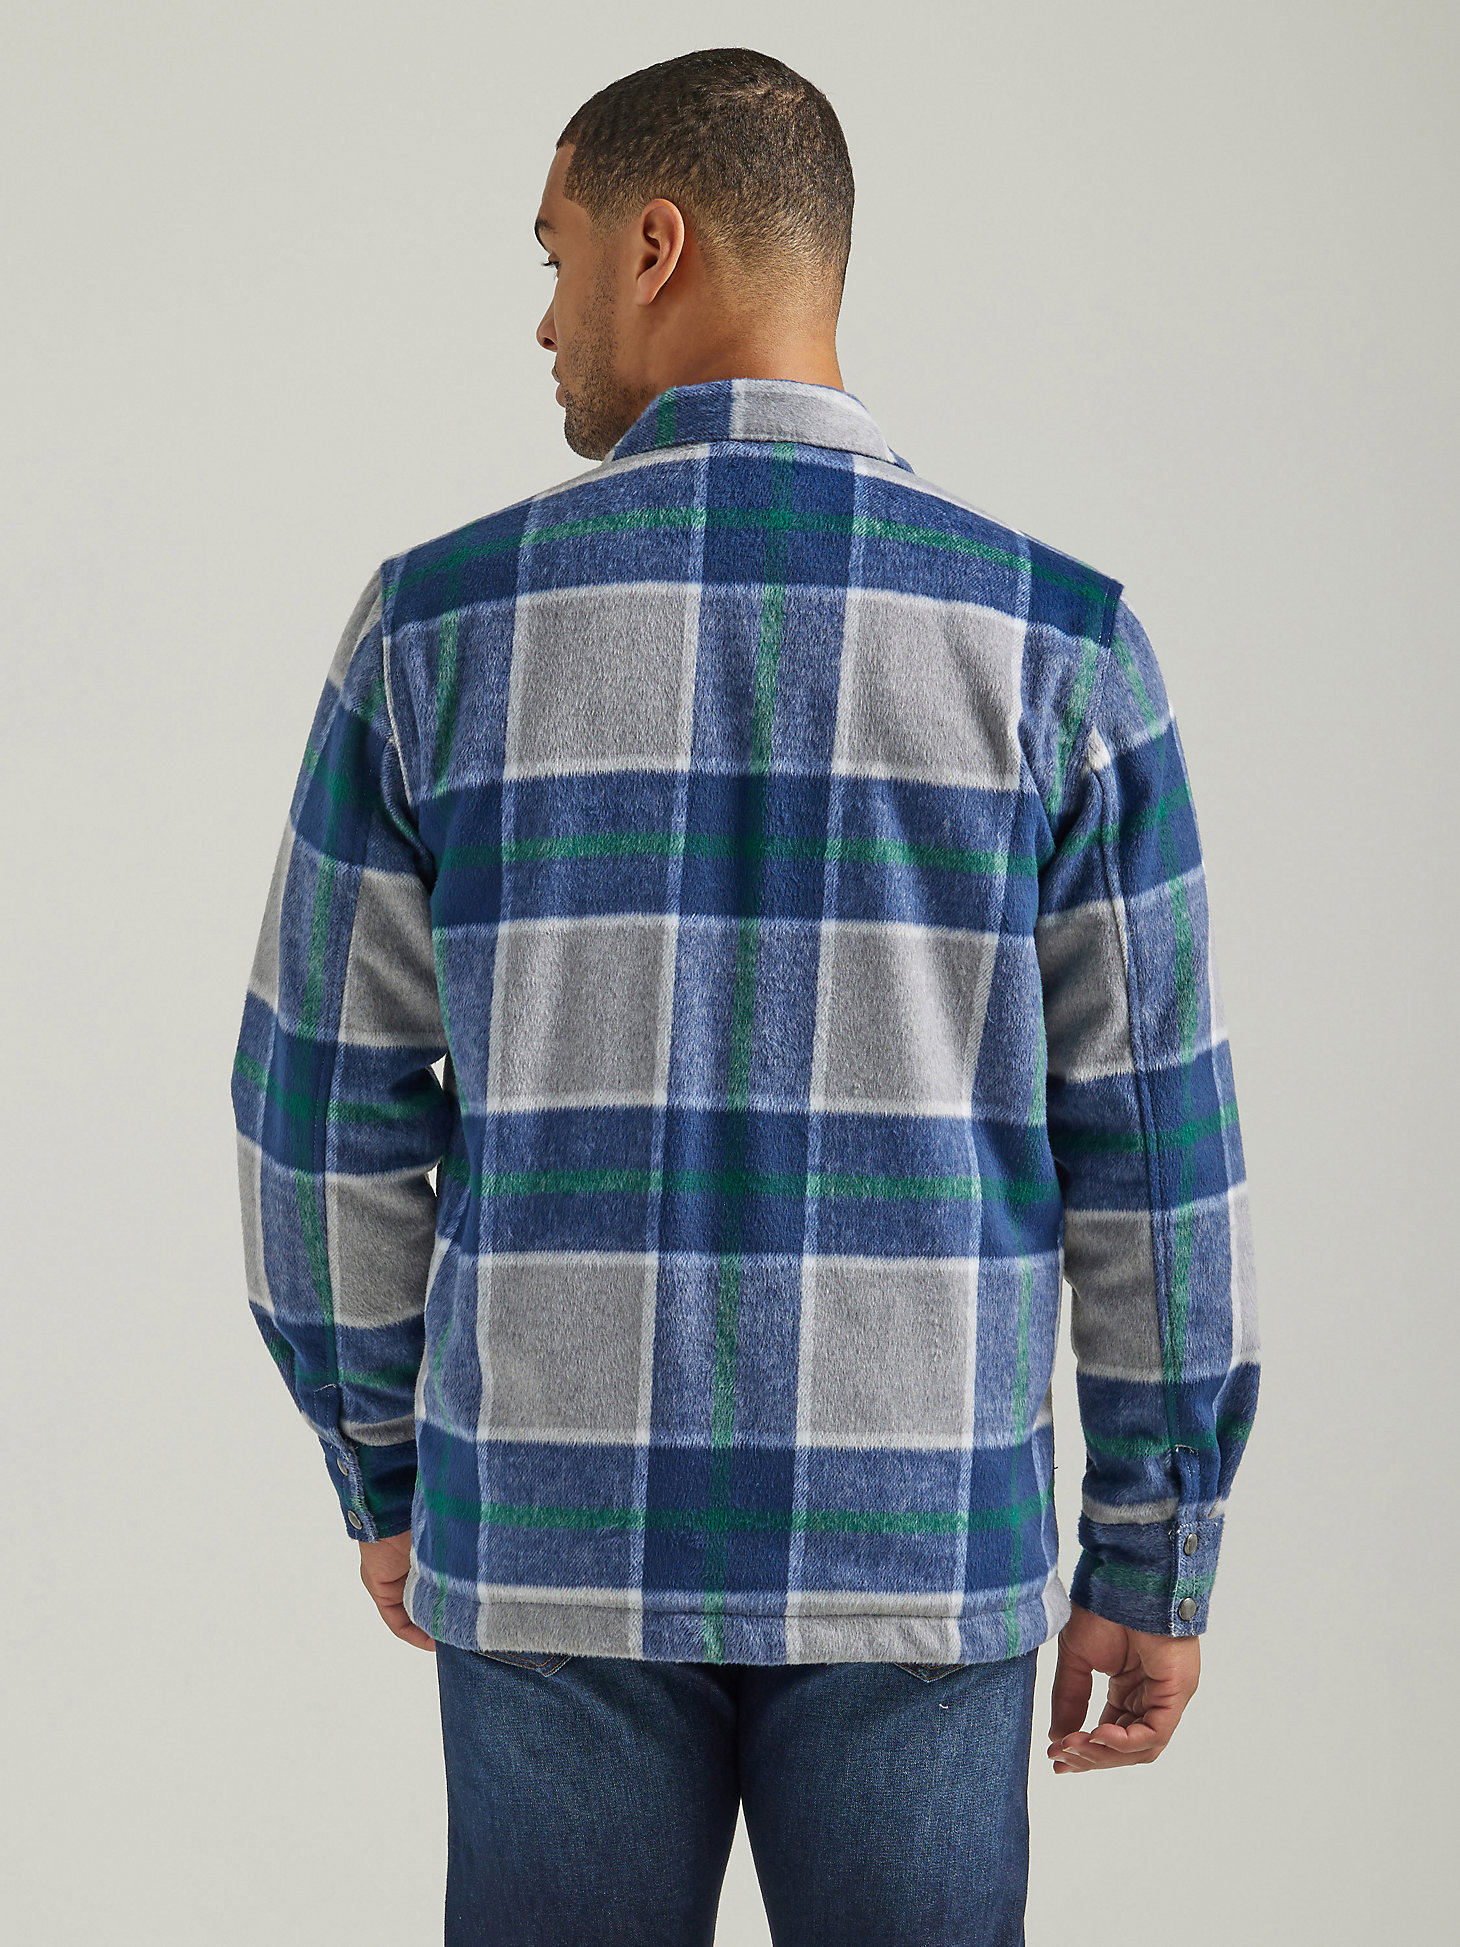 Men's Wrangler Full Zip Sherpa Lined Flannel Shirt Jacket in Pebble alternative view 1